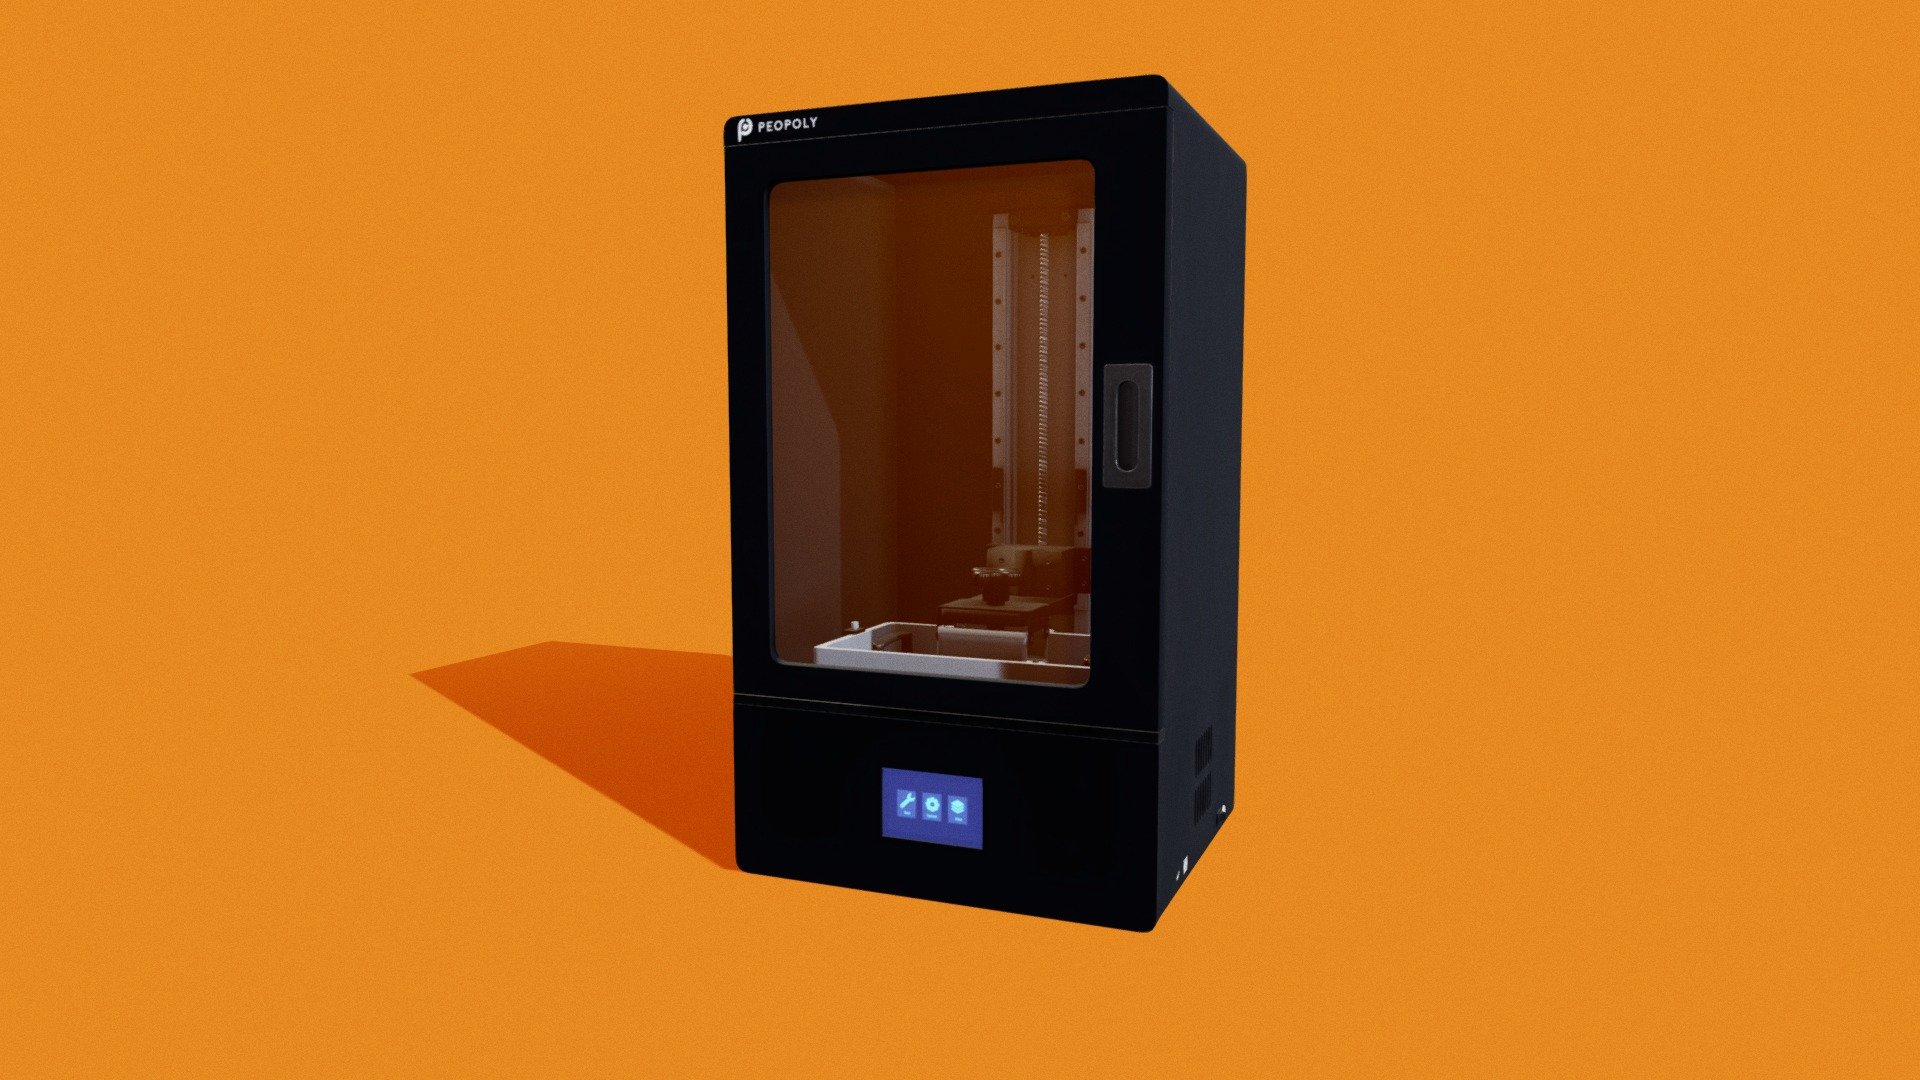 Peopoly Phenom L - 3D printer
https://peopoly.net/products/phenom - Peopoly Phenom L - 3D printer - 3D model by msanjurj 3d model